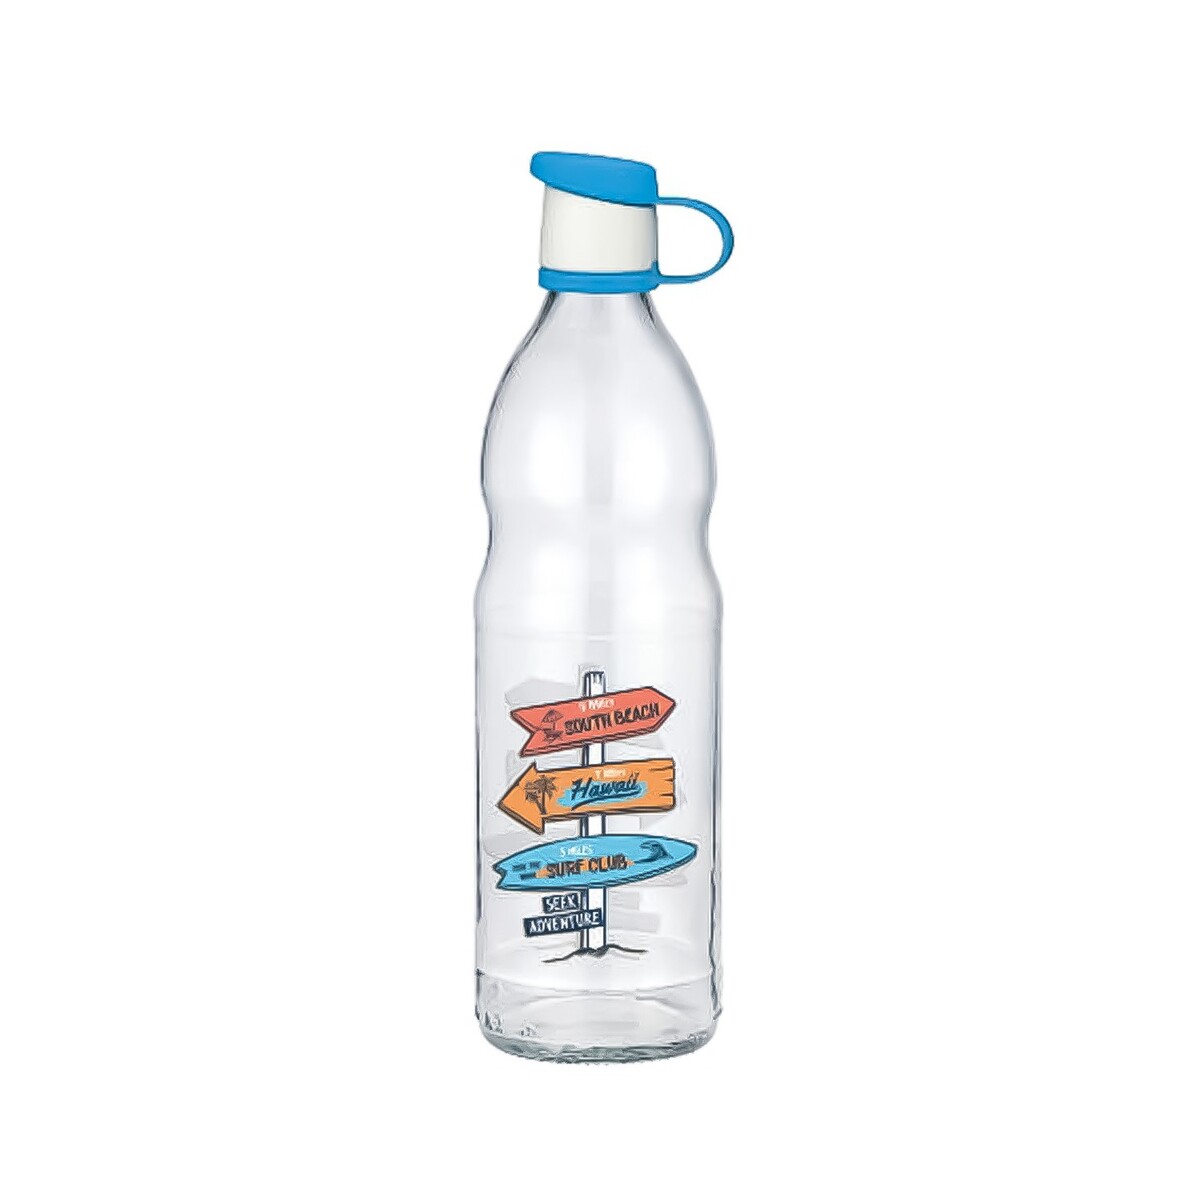 Renga Zen Glass Bottle 1liter Deco (Pack of 1)